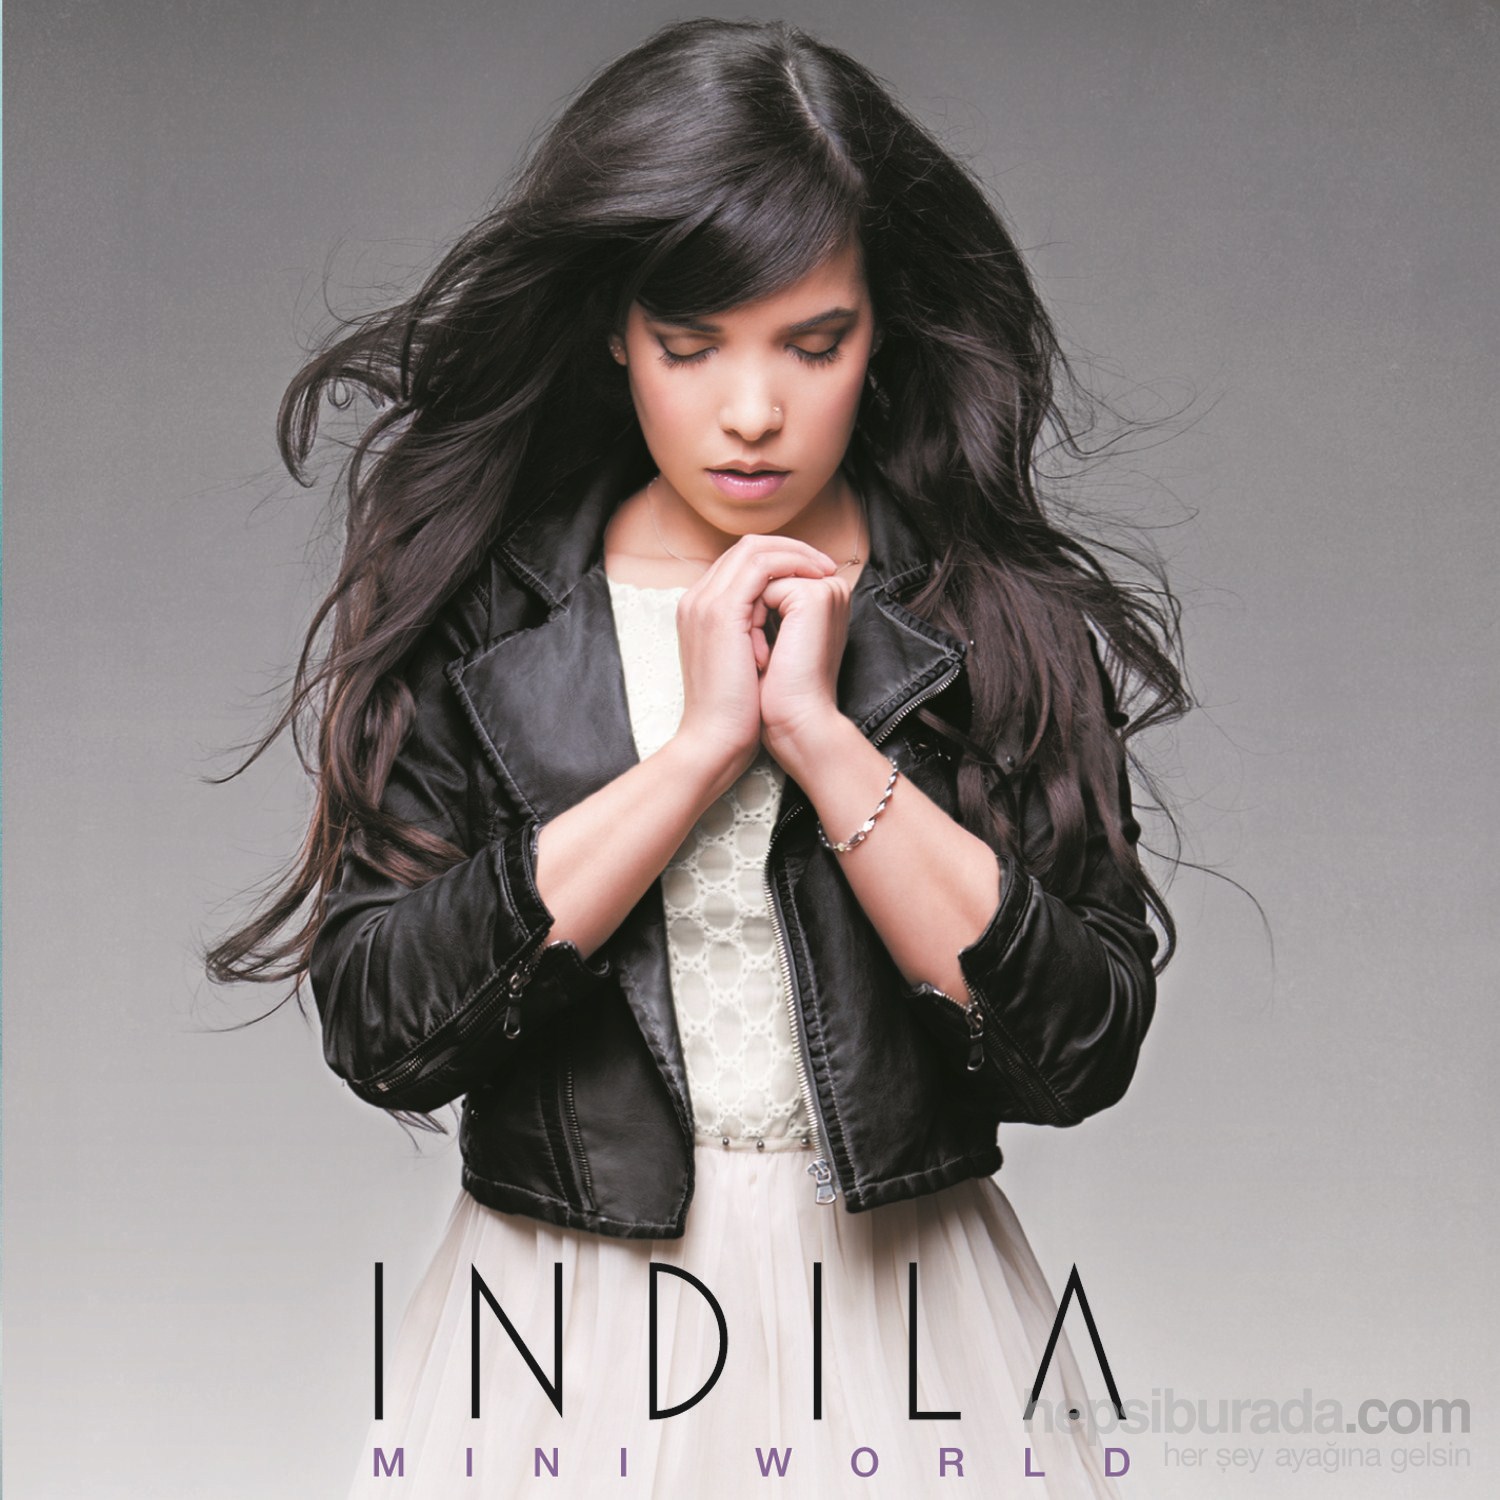 Indila - Mini World (Licensee Edition)